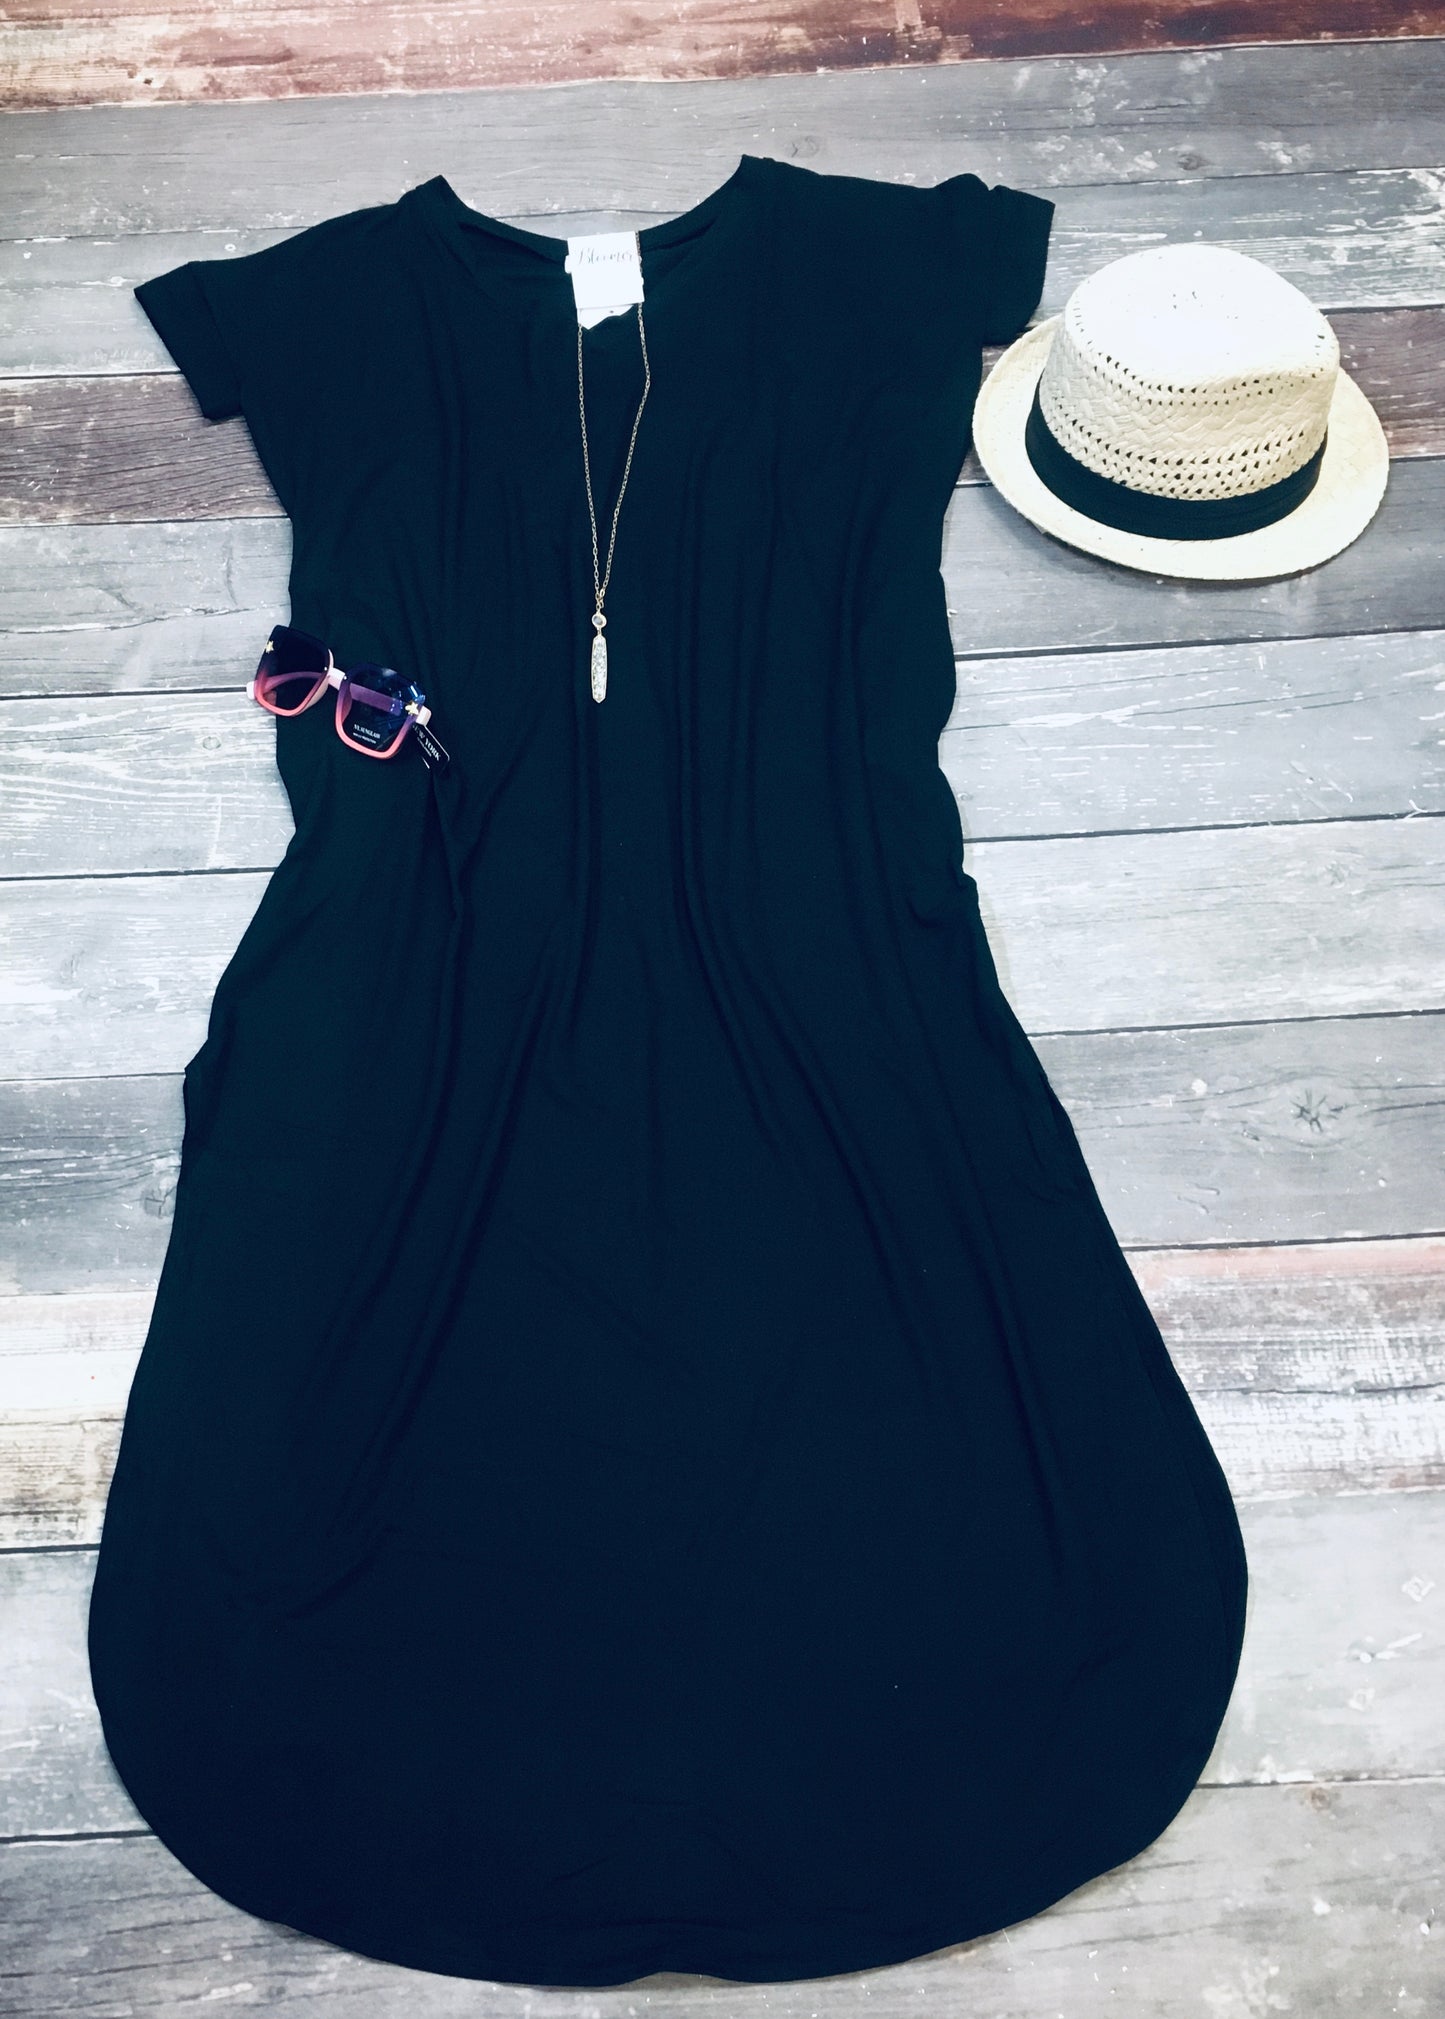 Long black dress w/side slits